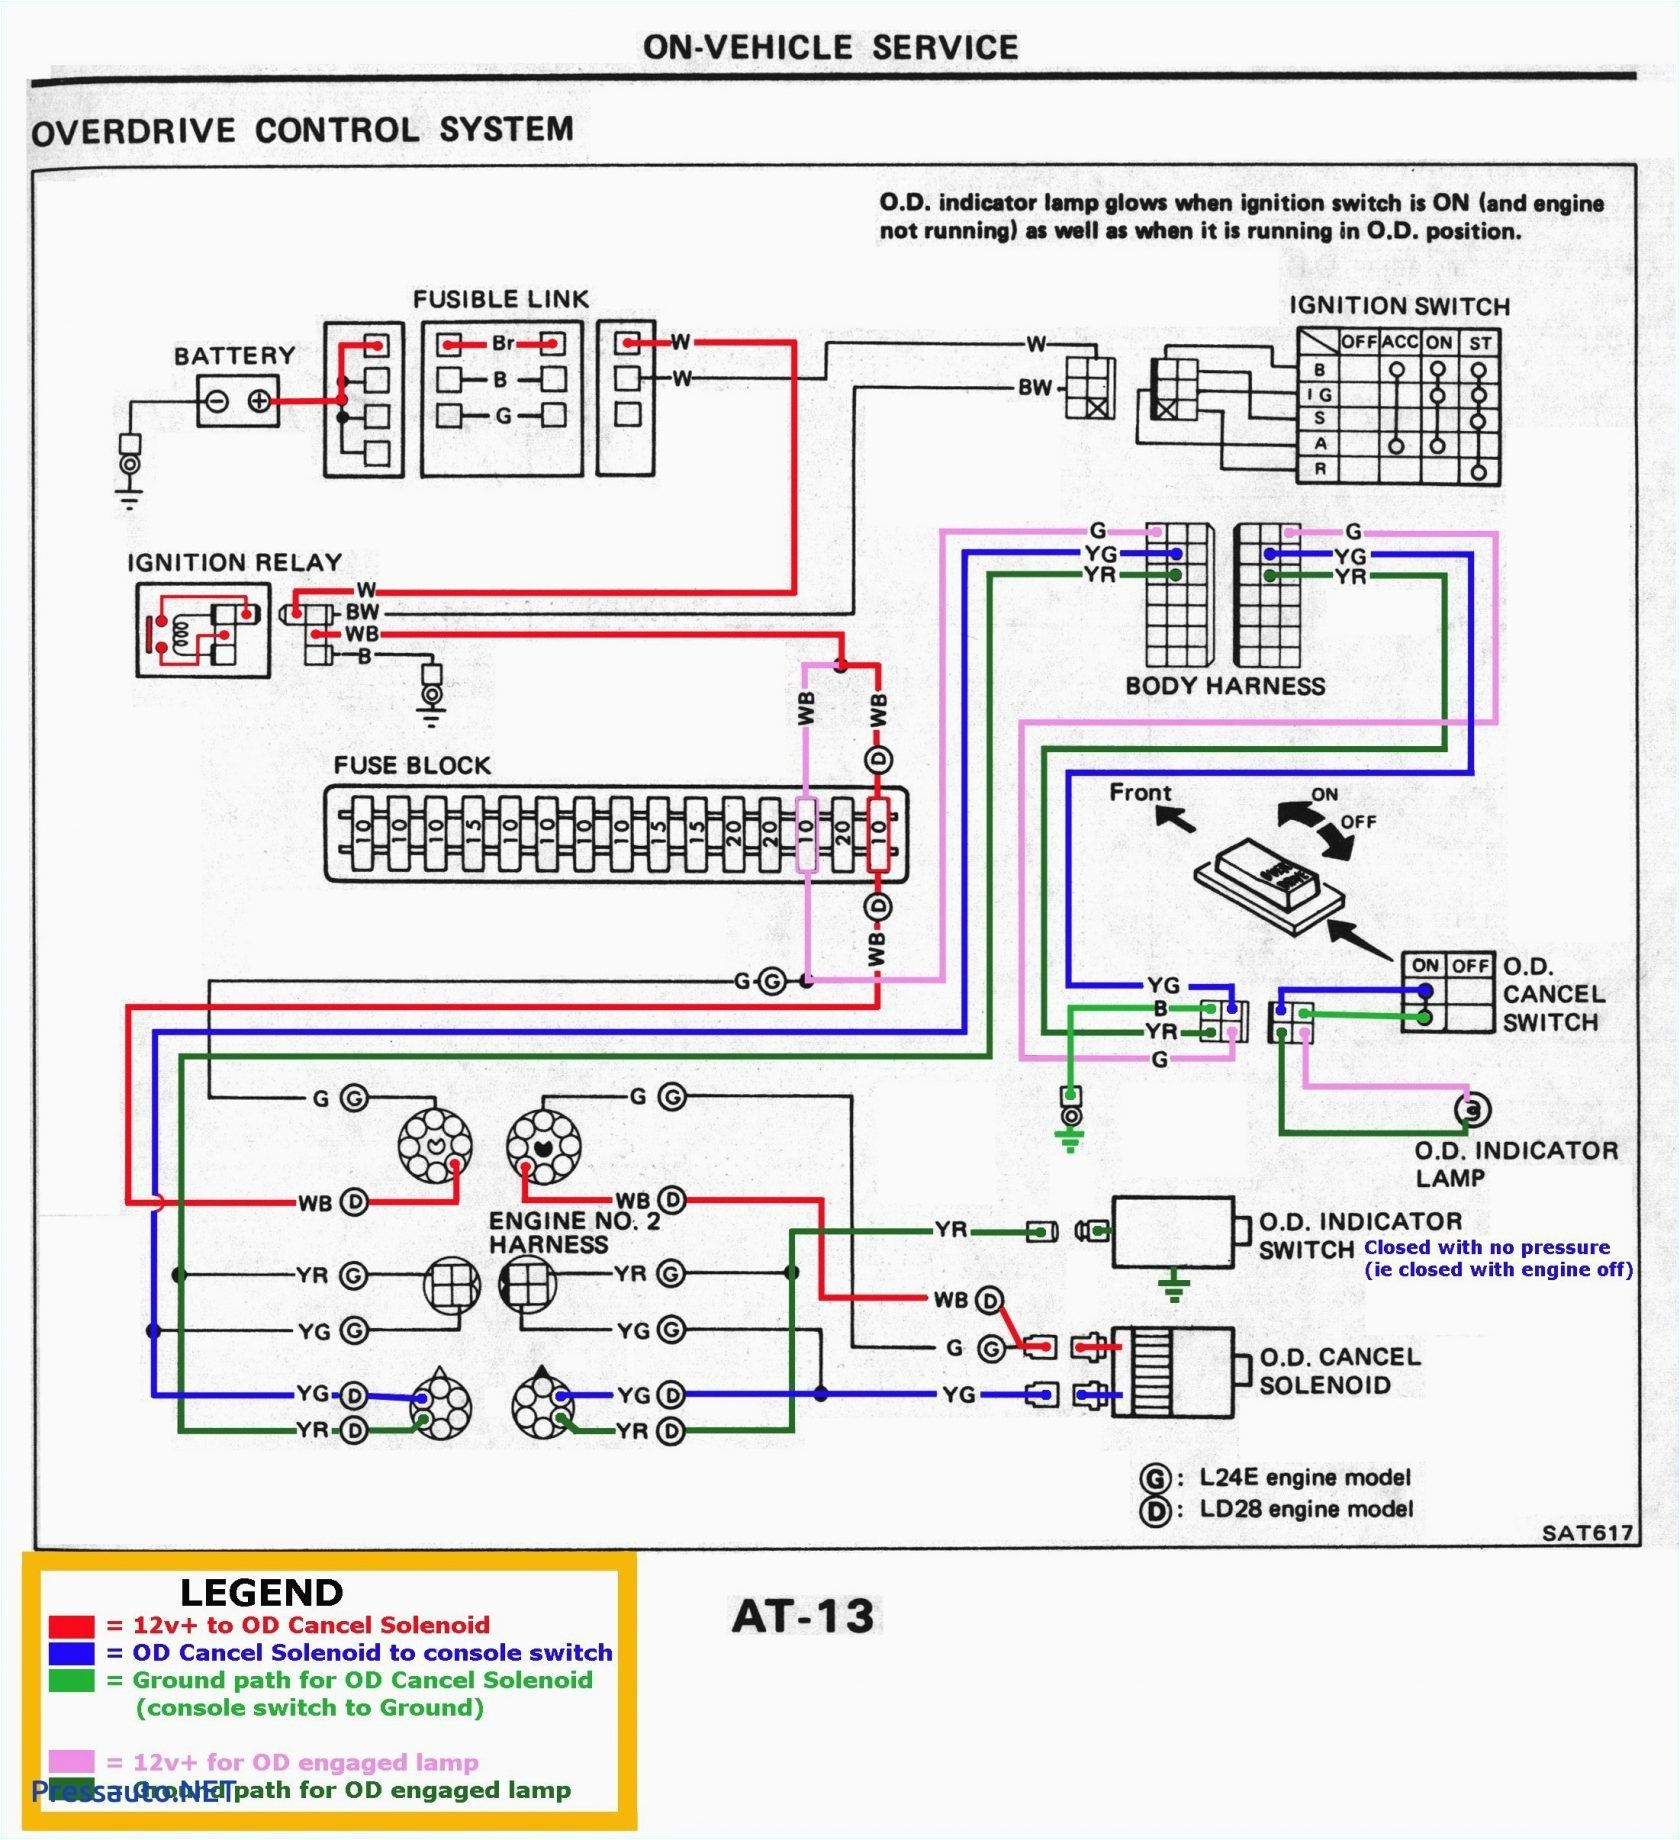 basic wiring diagrams wiring diagram repair guides basic electrical wiring diagrams gsf26c4exb02